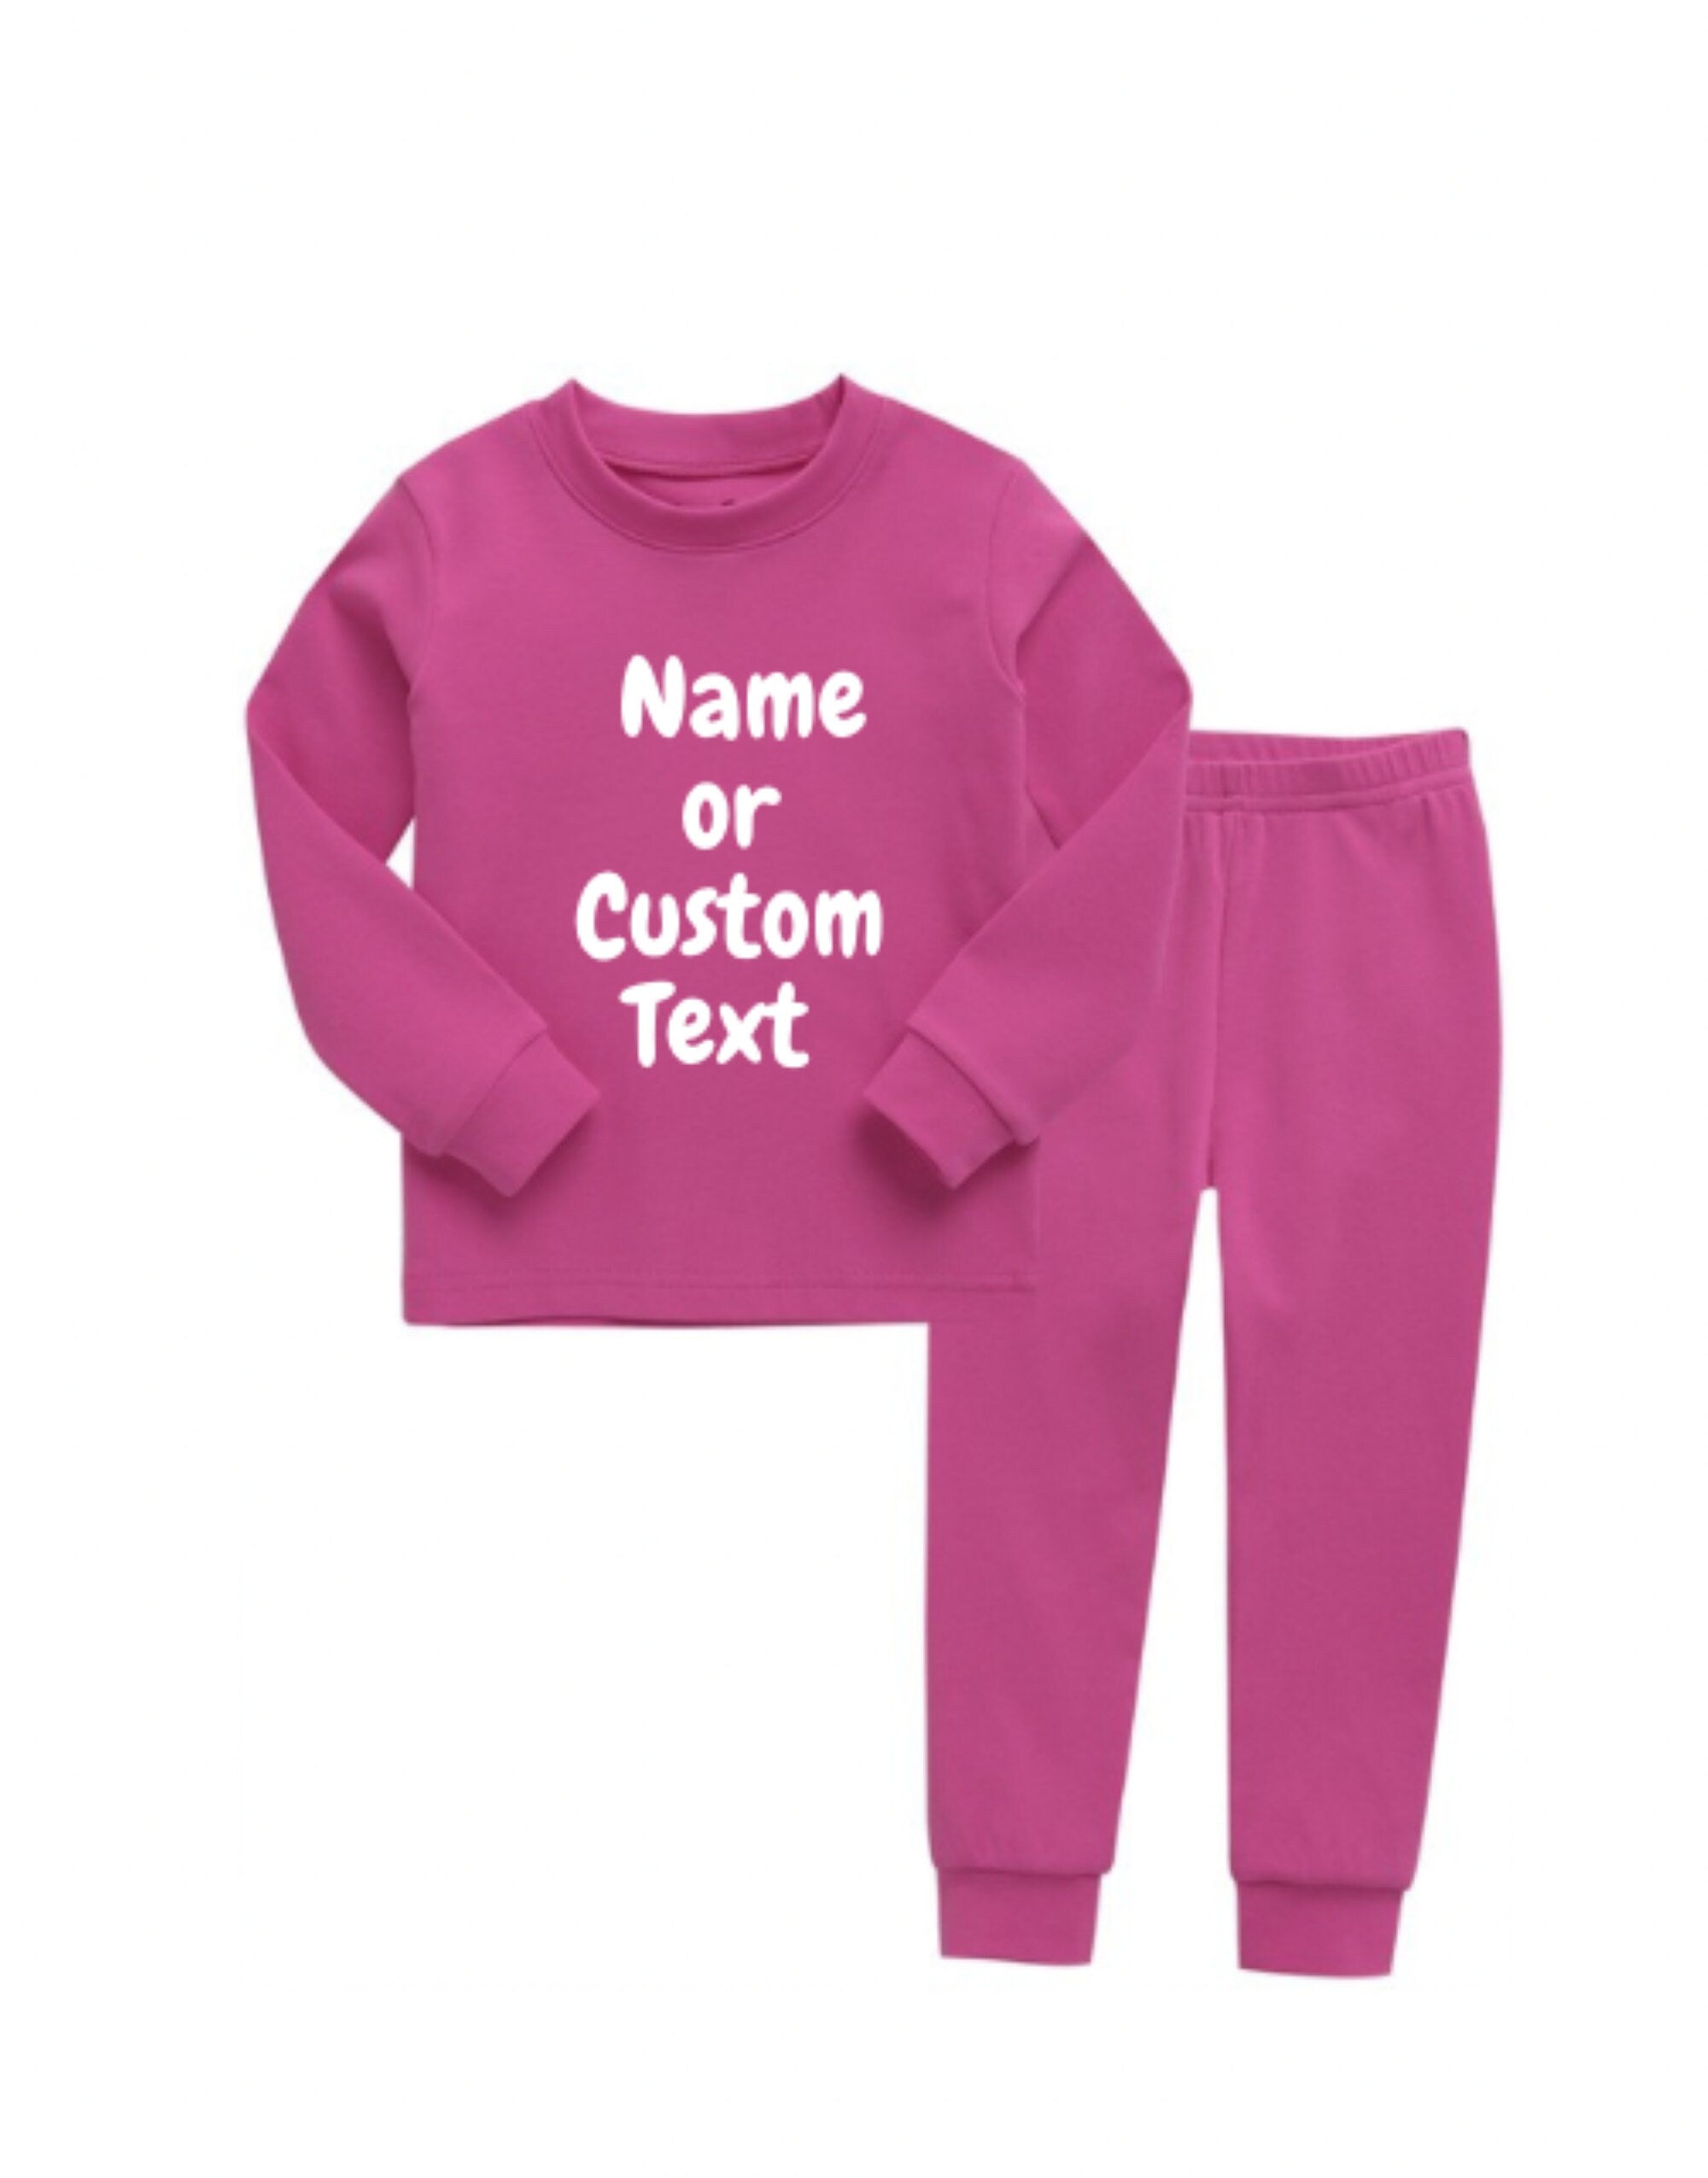 Kids Personalized Pajama Set Name or Custom Text| Toddler Youth Pajamas| Big Kids| Multiple Colors|2 Piece Set| Sleeper| Girl| Boy| Hot Pink